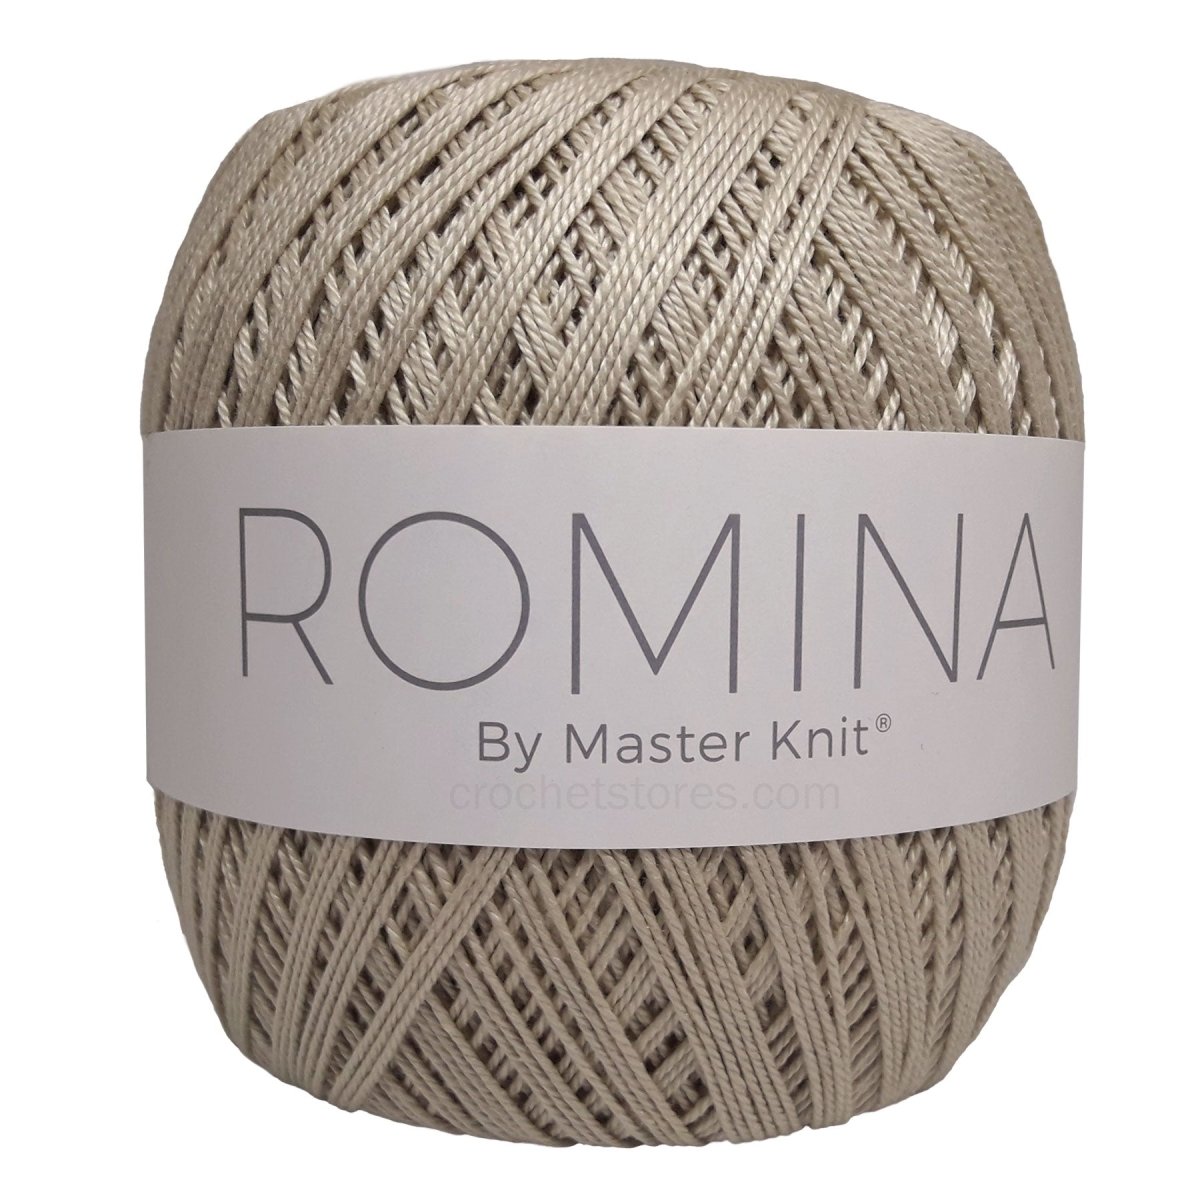 ROMINA - Crochetstores9335-257745051438593